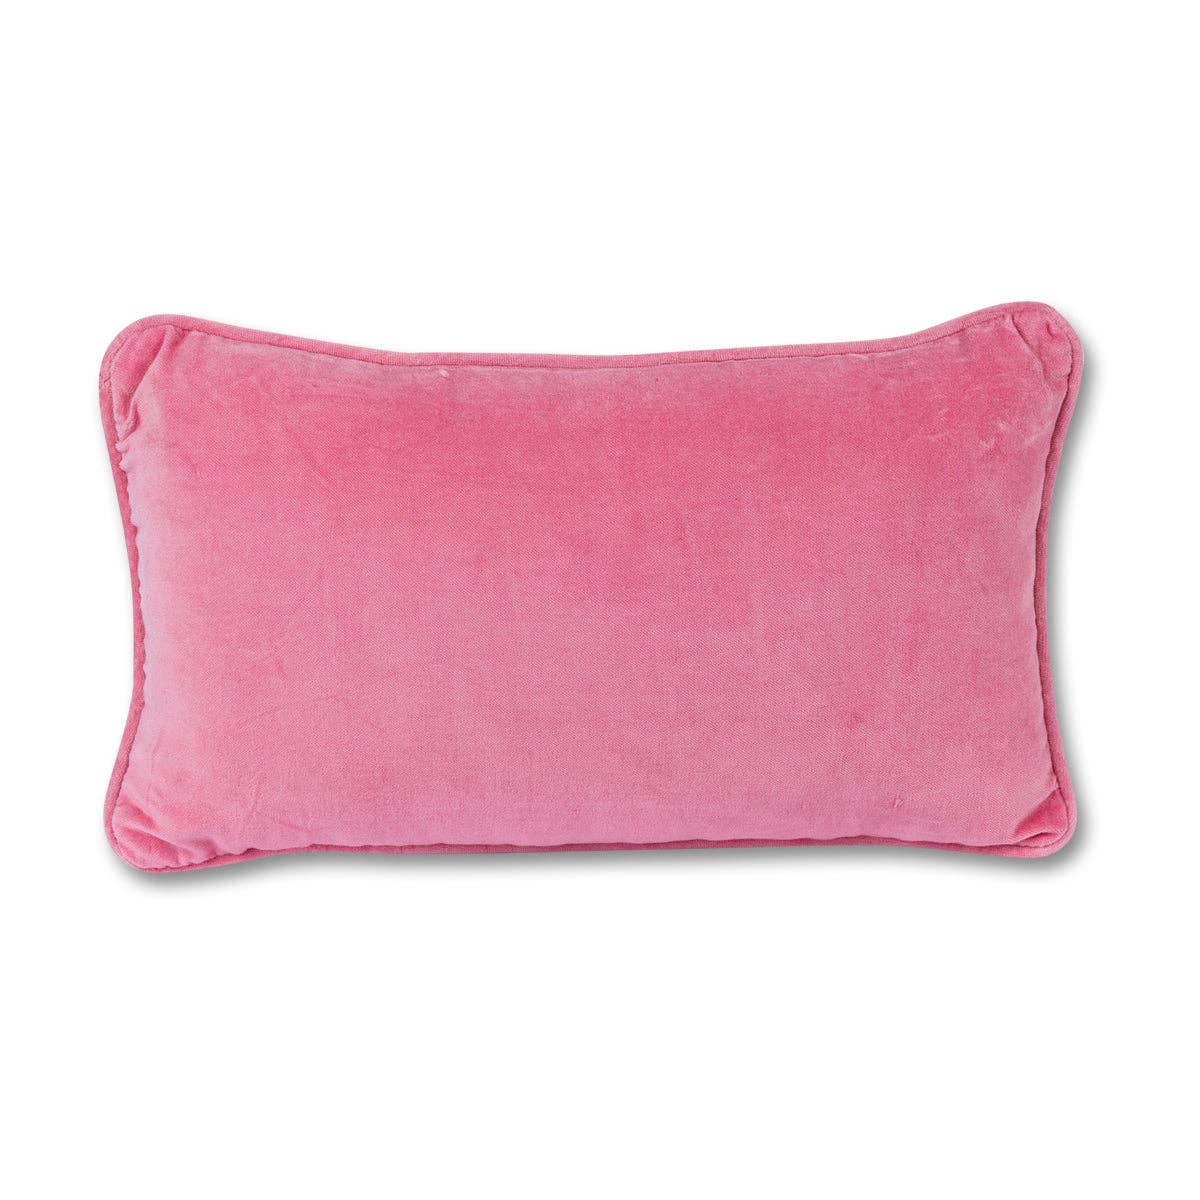 Ain't Nobody Needlepoint Pillow by Furbish Studio